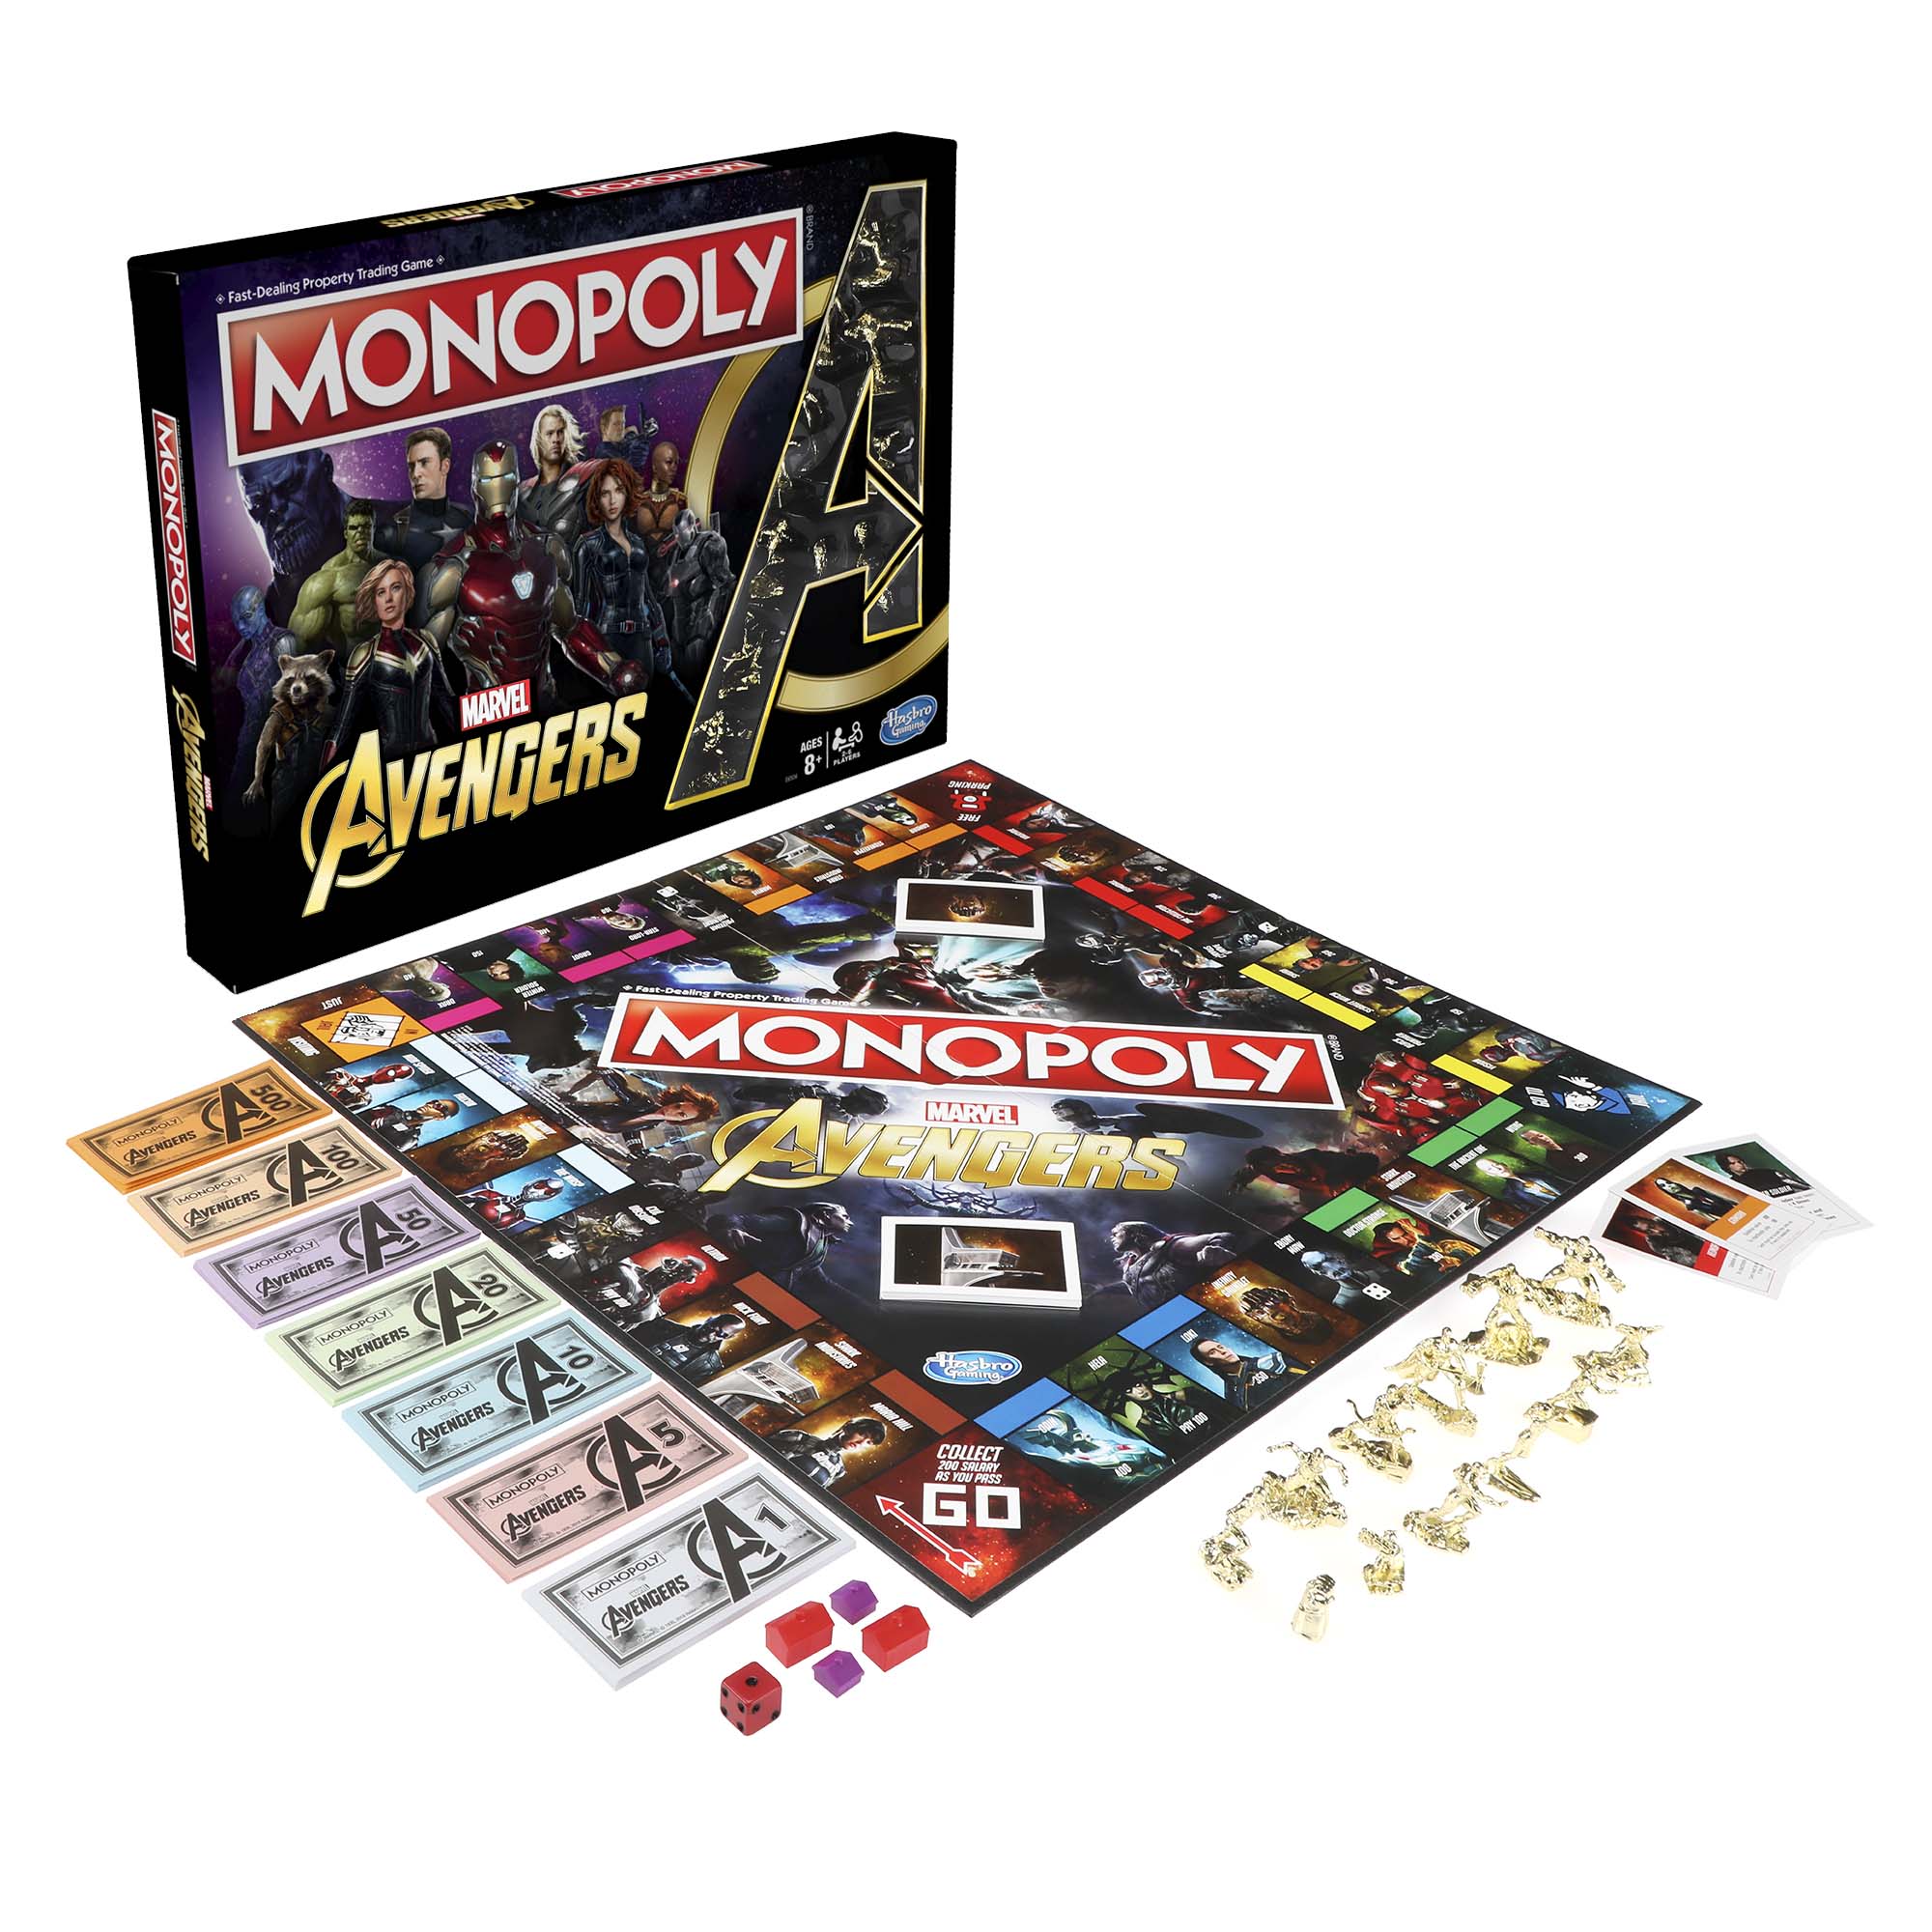 Monopoly Avengers solo 39,5€